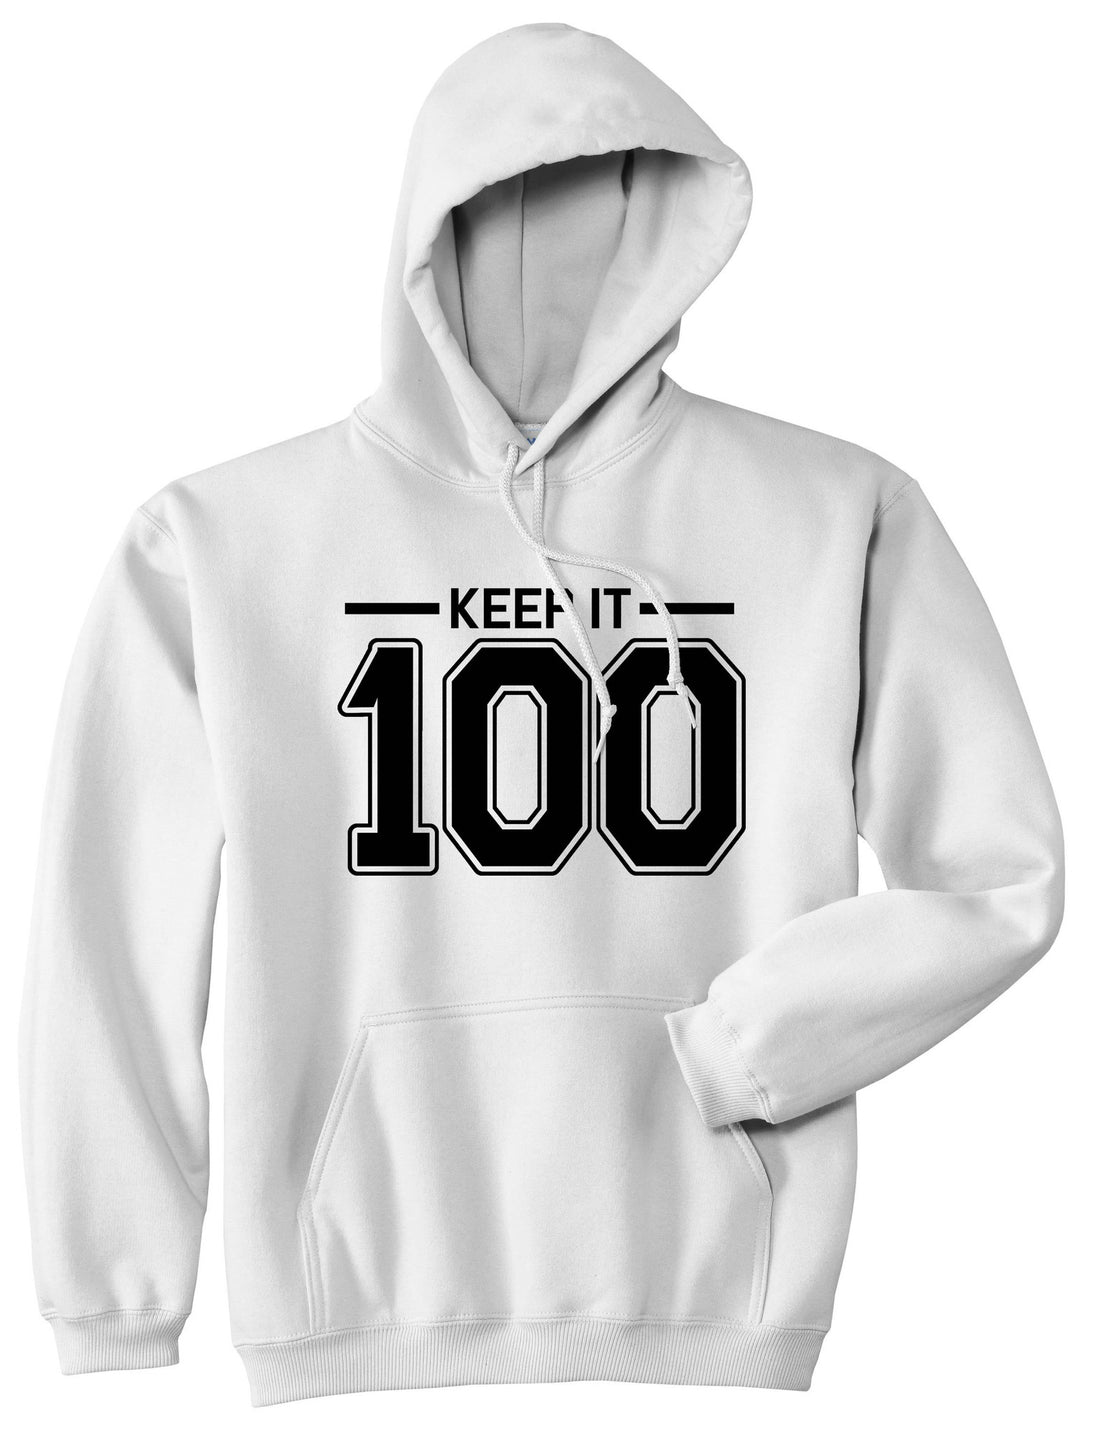 Keep It 100 Pullover Hoodie Hoody in White by Kings Of NY